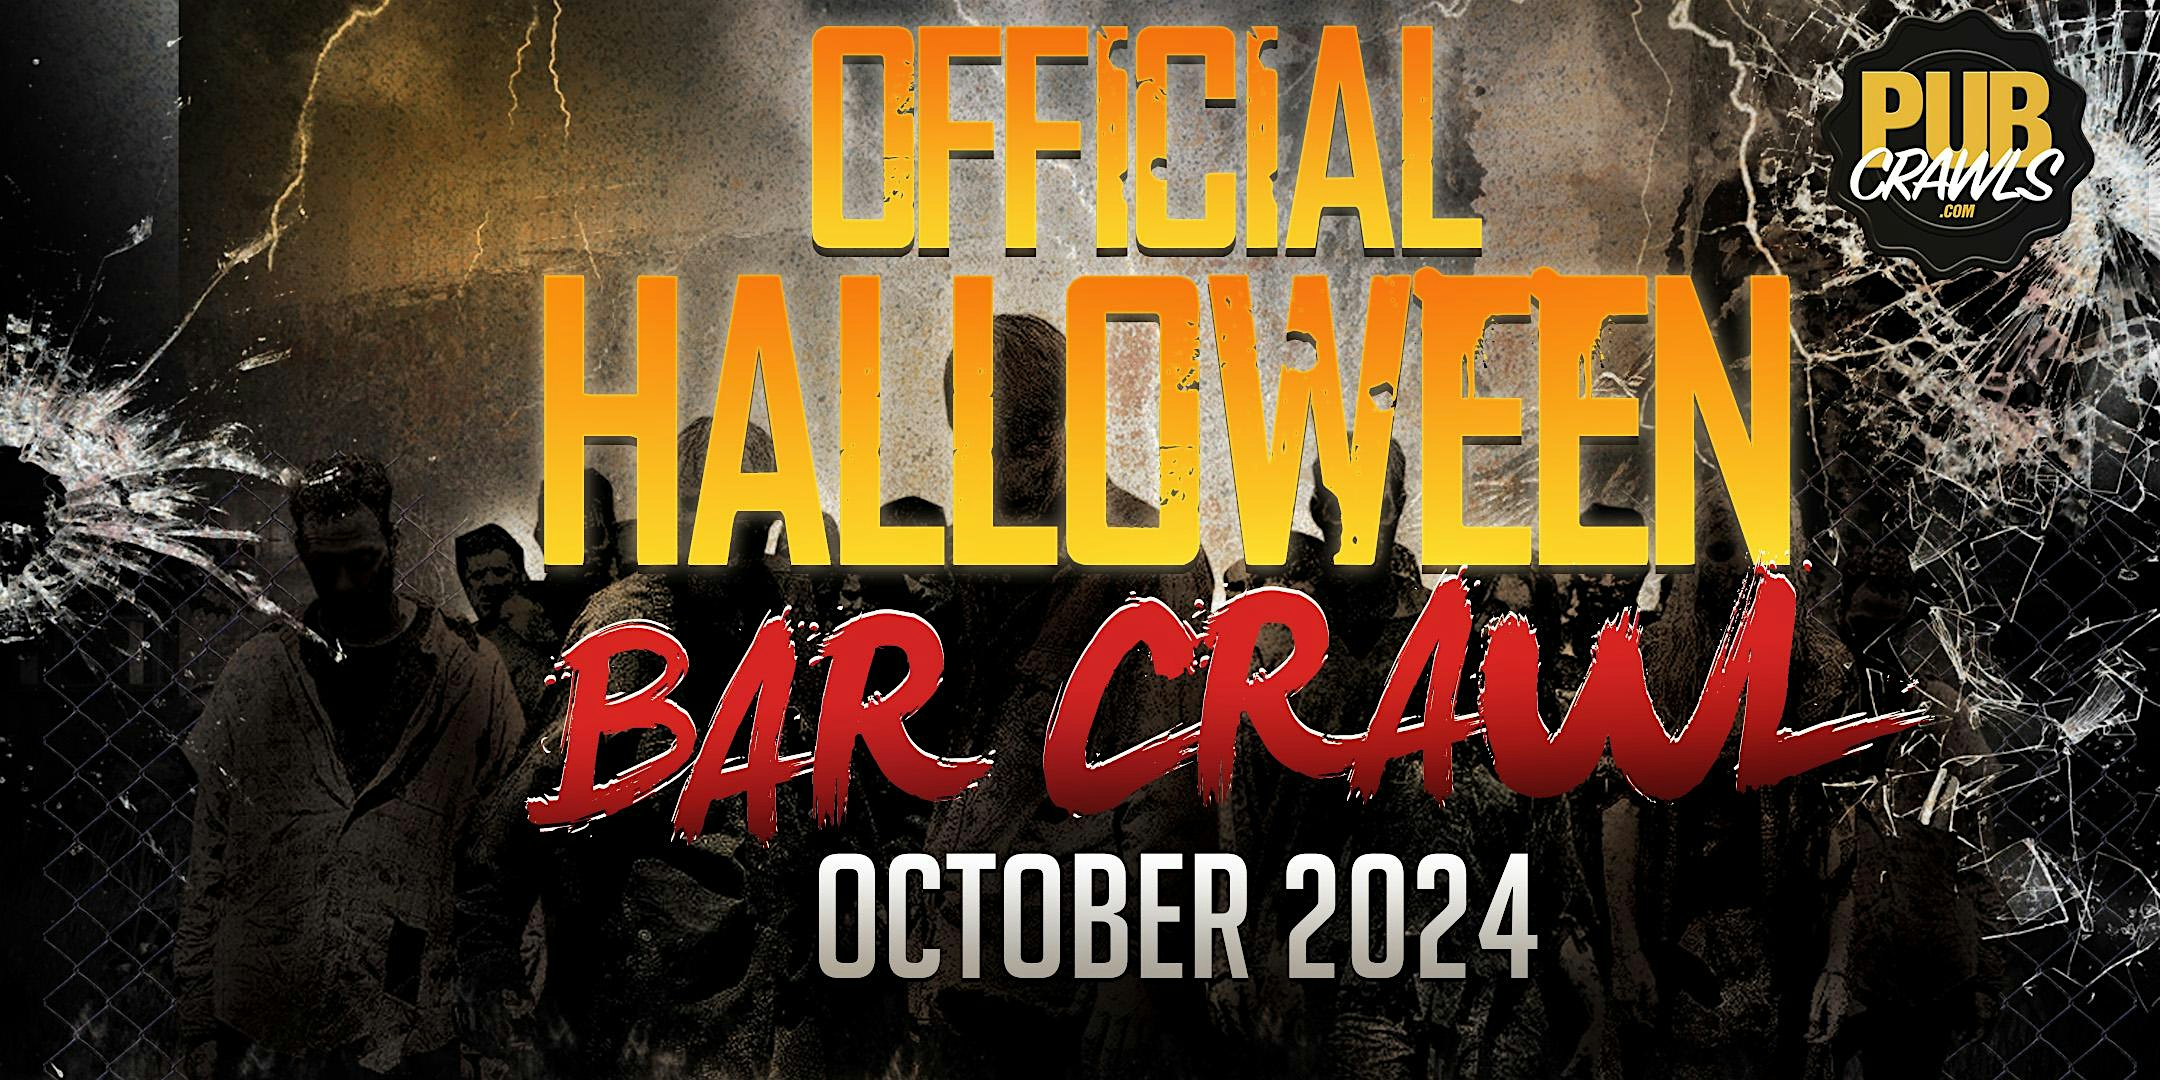 Detroit Greektown Official Halloween Bar Crawl